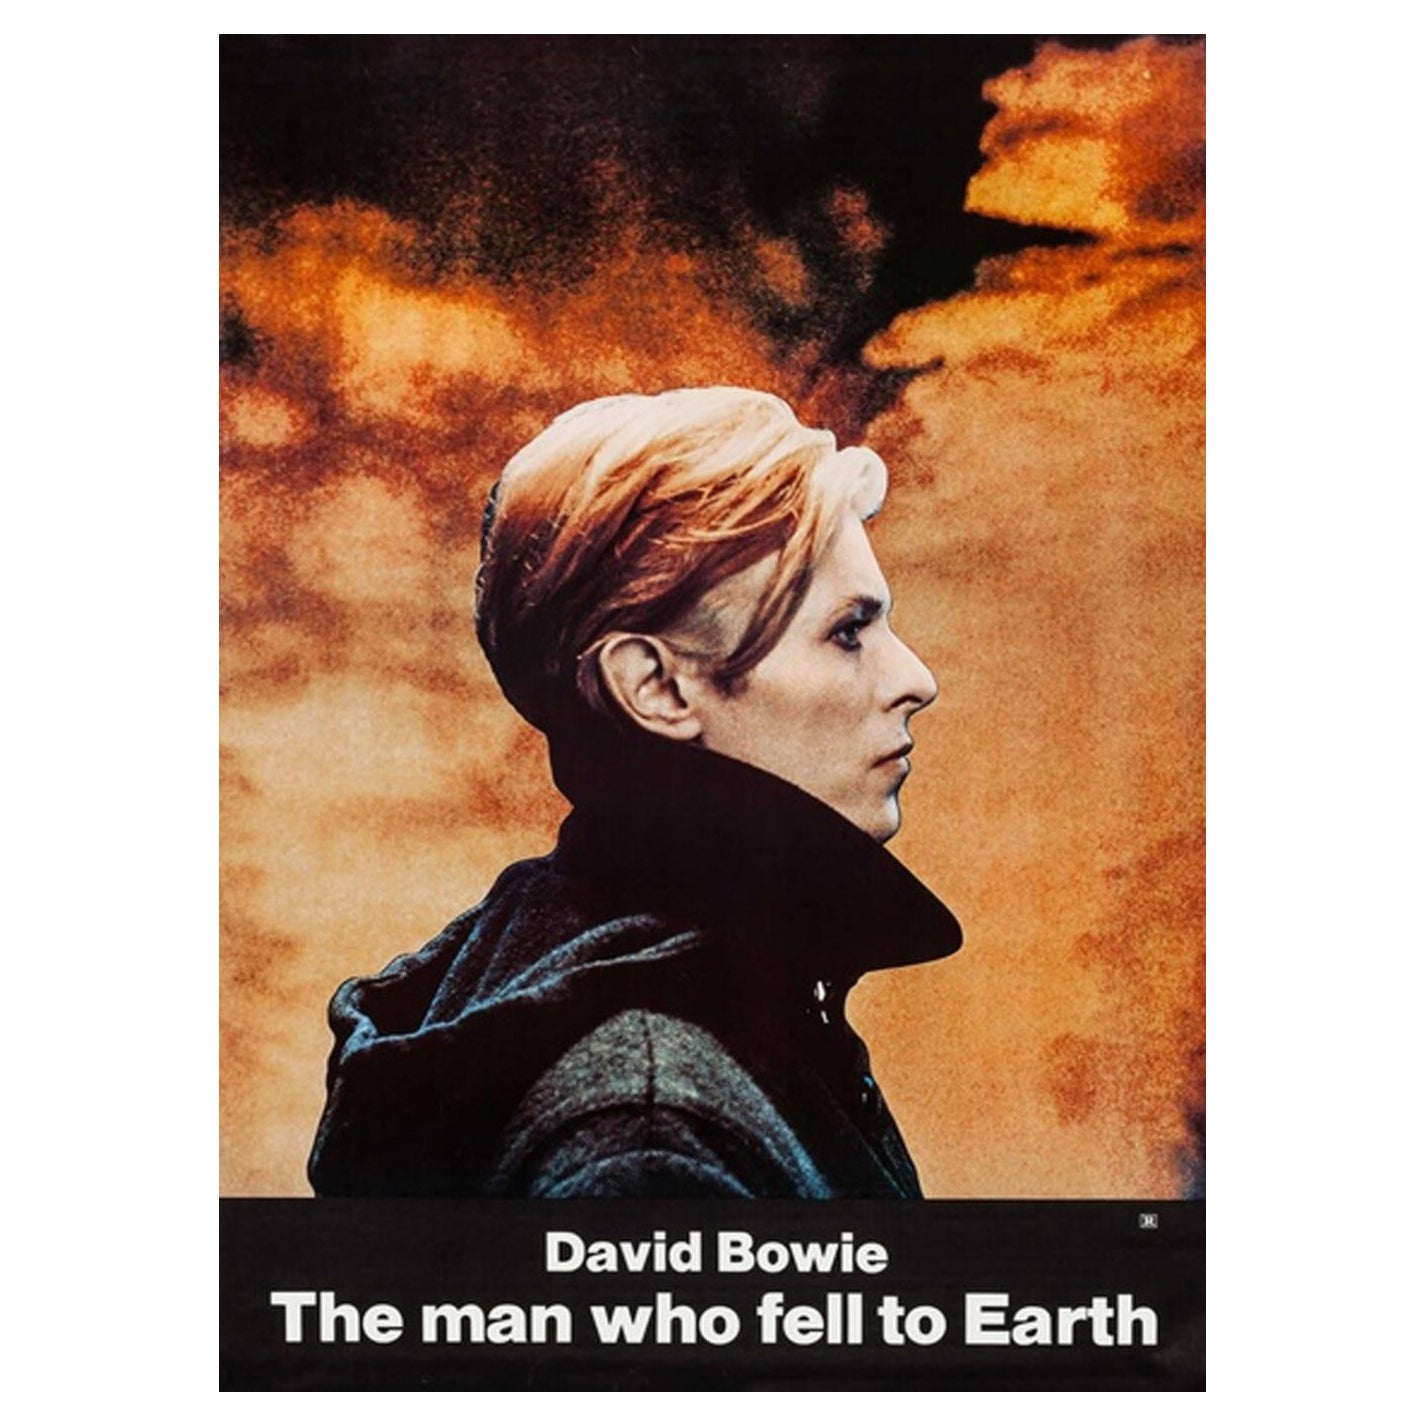 David Bowie - The Man Who Fell To Earth - Affiche vintage originale de 1976